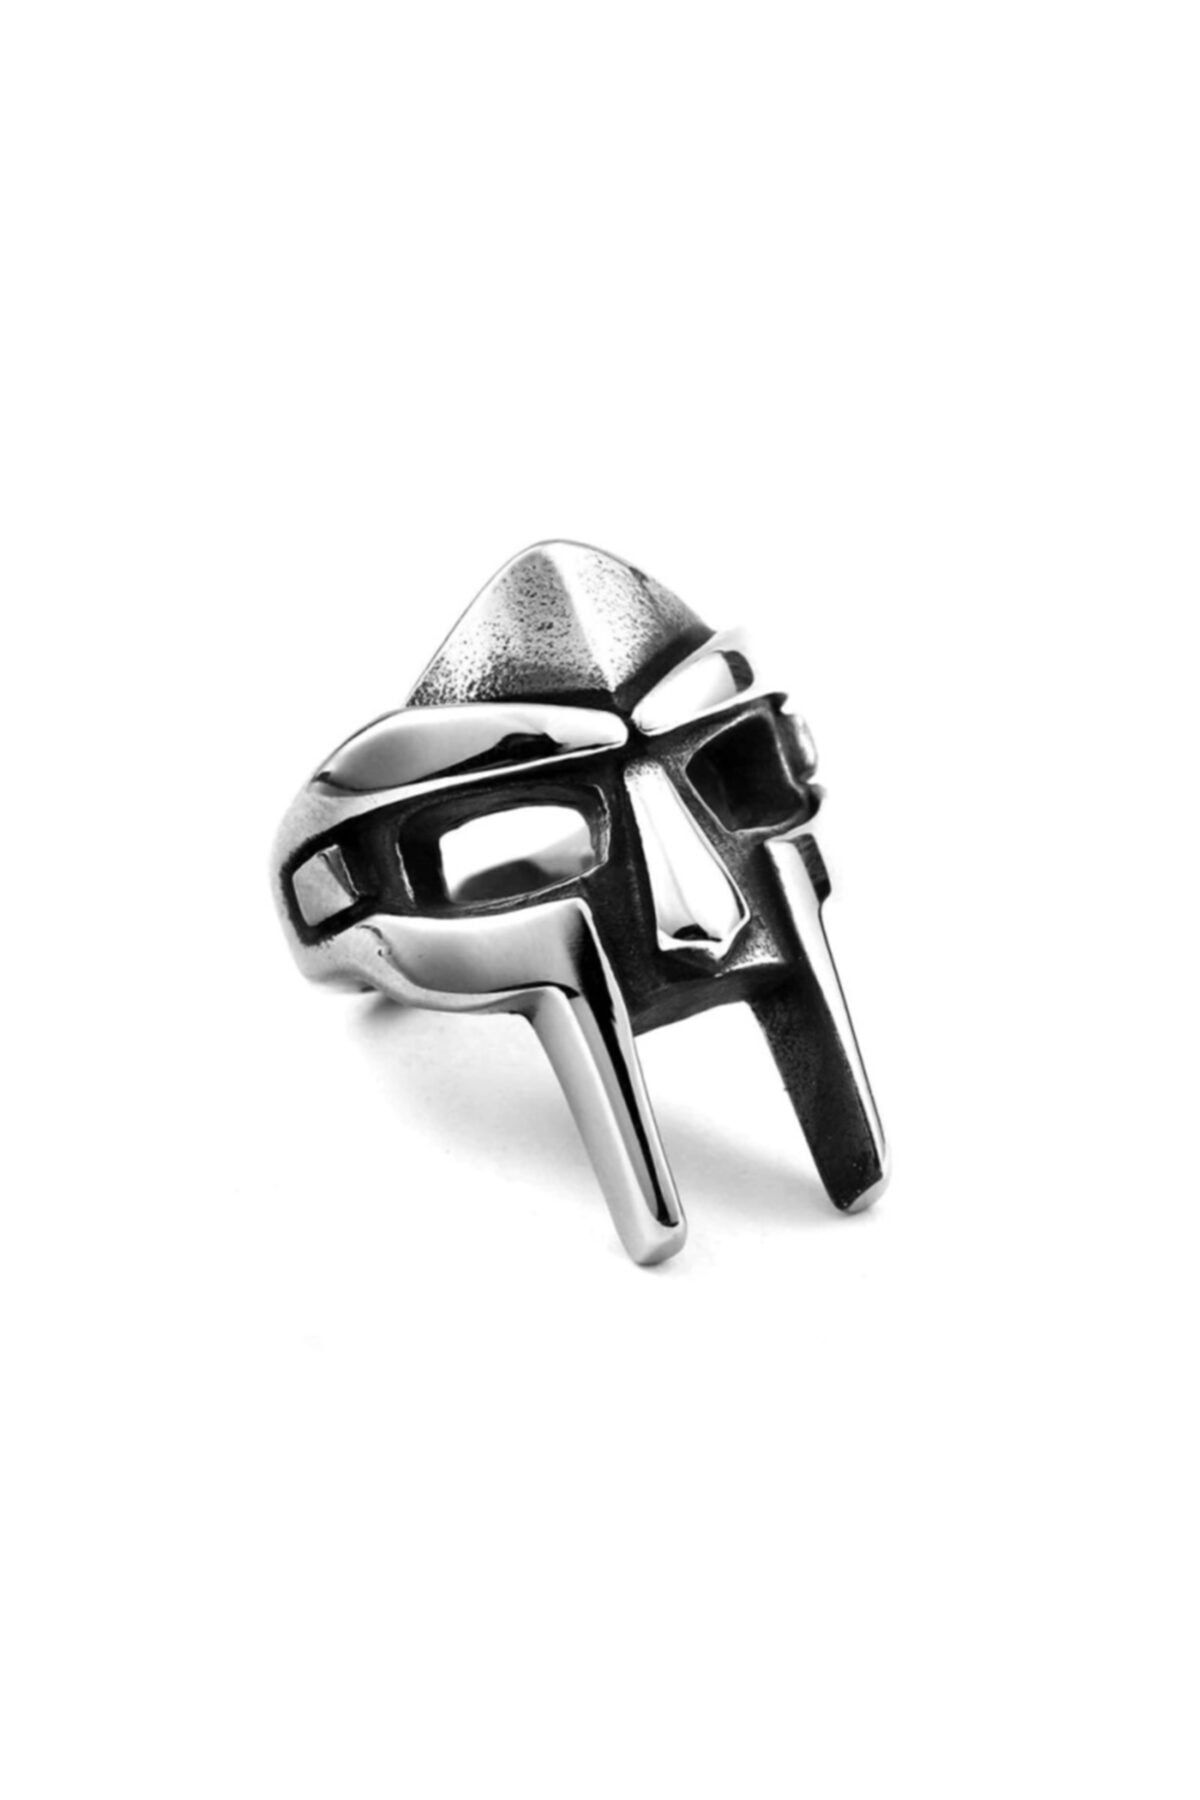 Gladiator Helmet Sterling Sliver Ring, Silver Spartan Rings, Men Gift Ring,  Silver Spartan Jewelry, Spartan Warrior Ring - Etsy